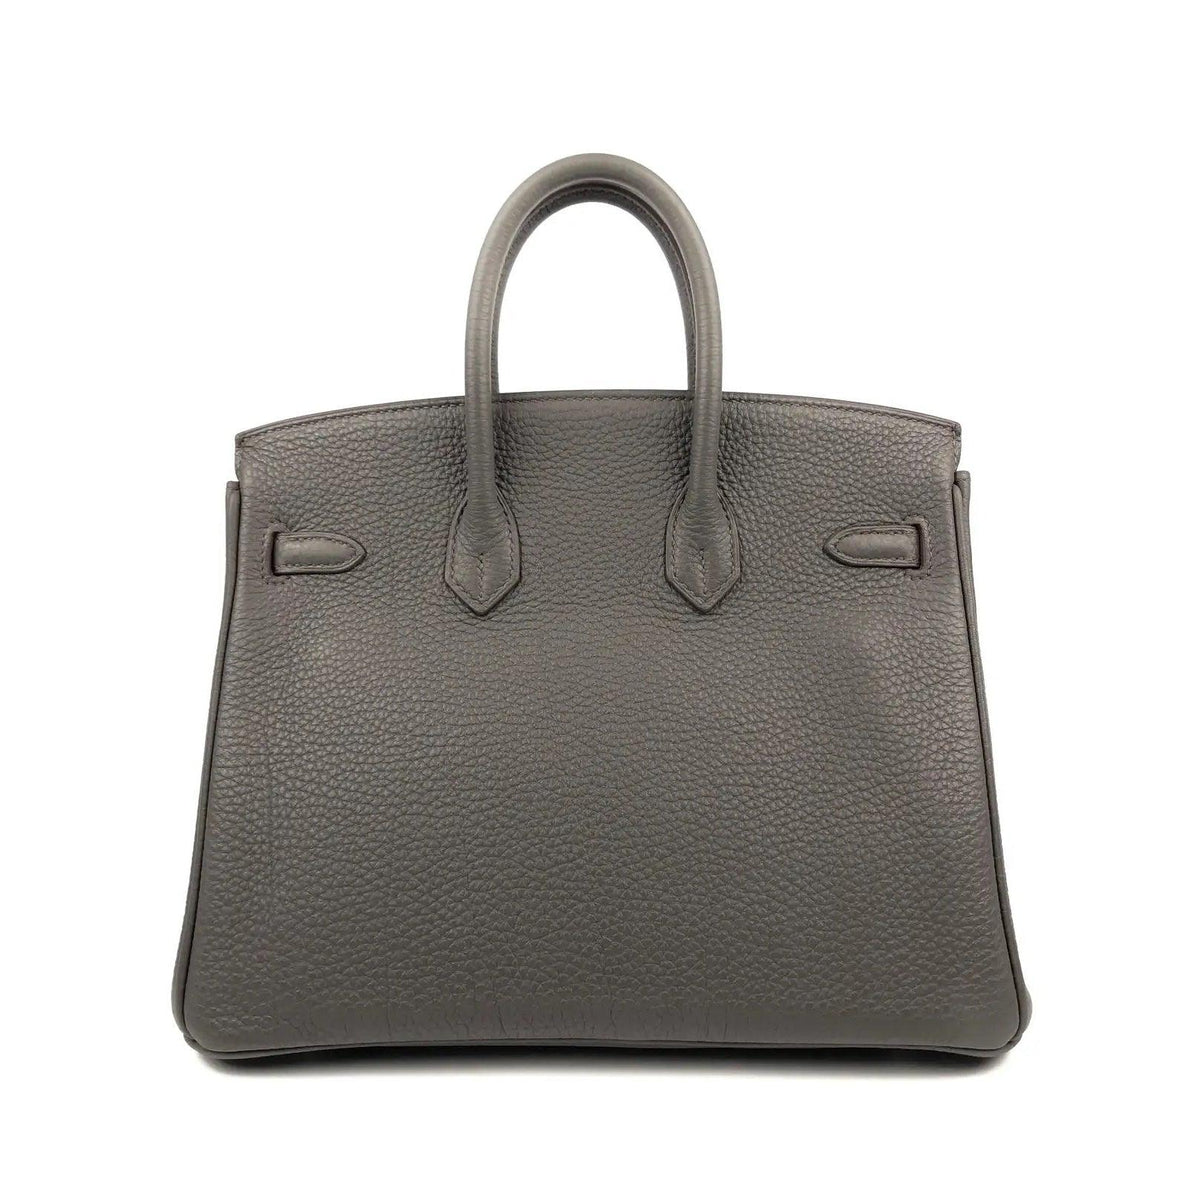 Pre-owned Rare HERMES Birkin 25 Etain Gray Togo Leather Bag - theREMODA